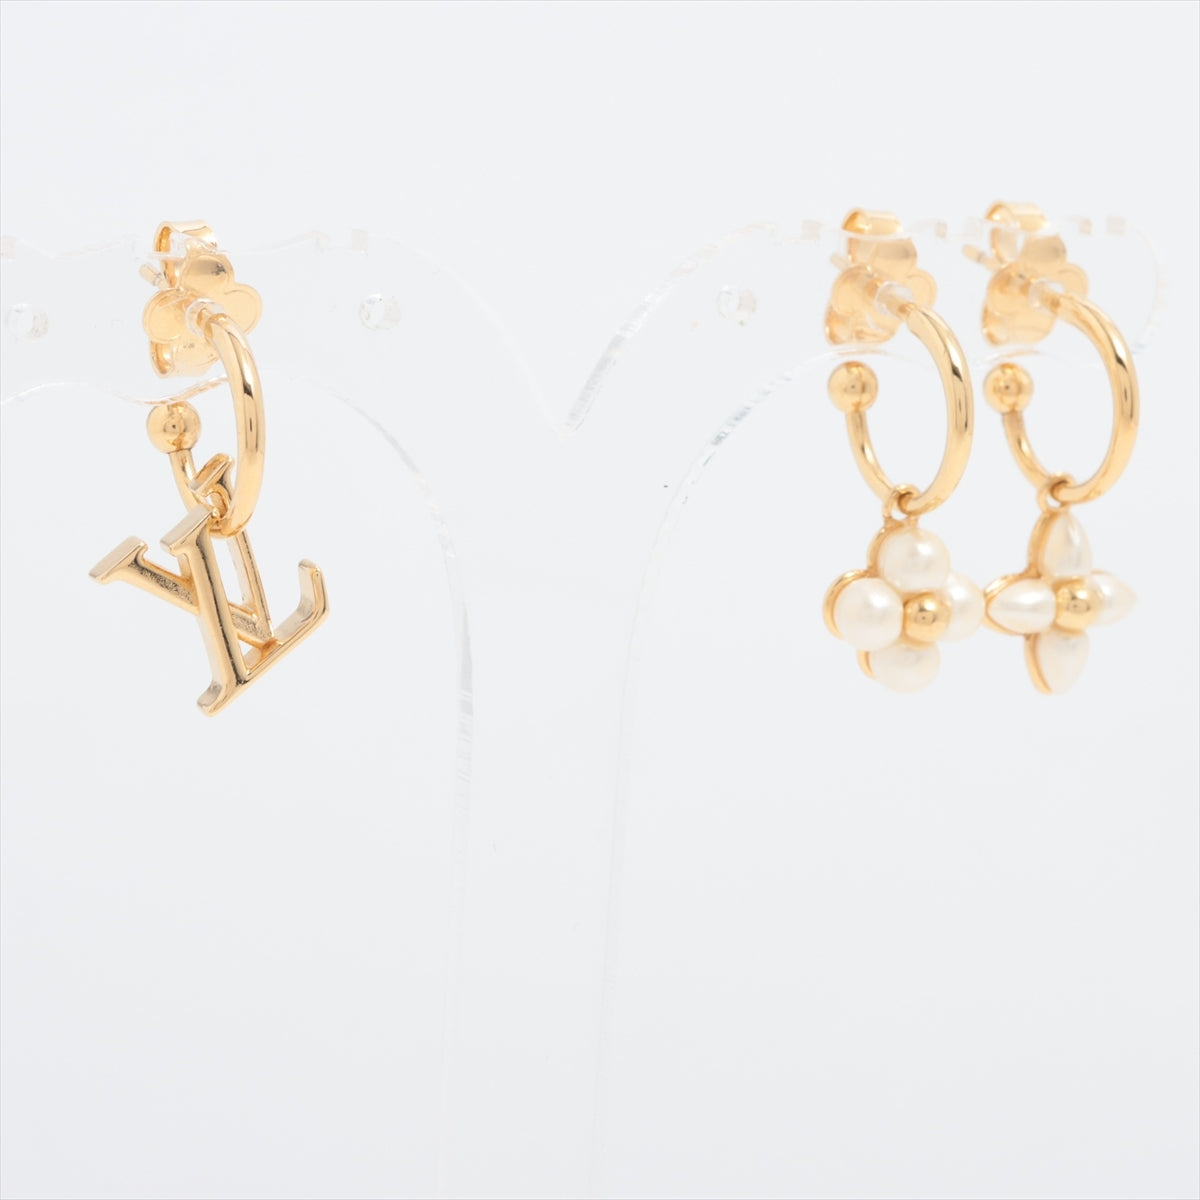 Louis Vuitton M01025 Piercing jewelry LV Floragram Set 3 GK3273 Piercing jewelry (for both ears) GP x Imitation pearl Gold